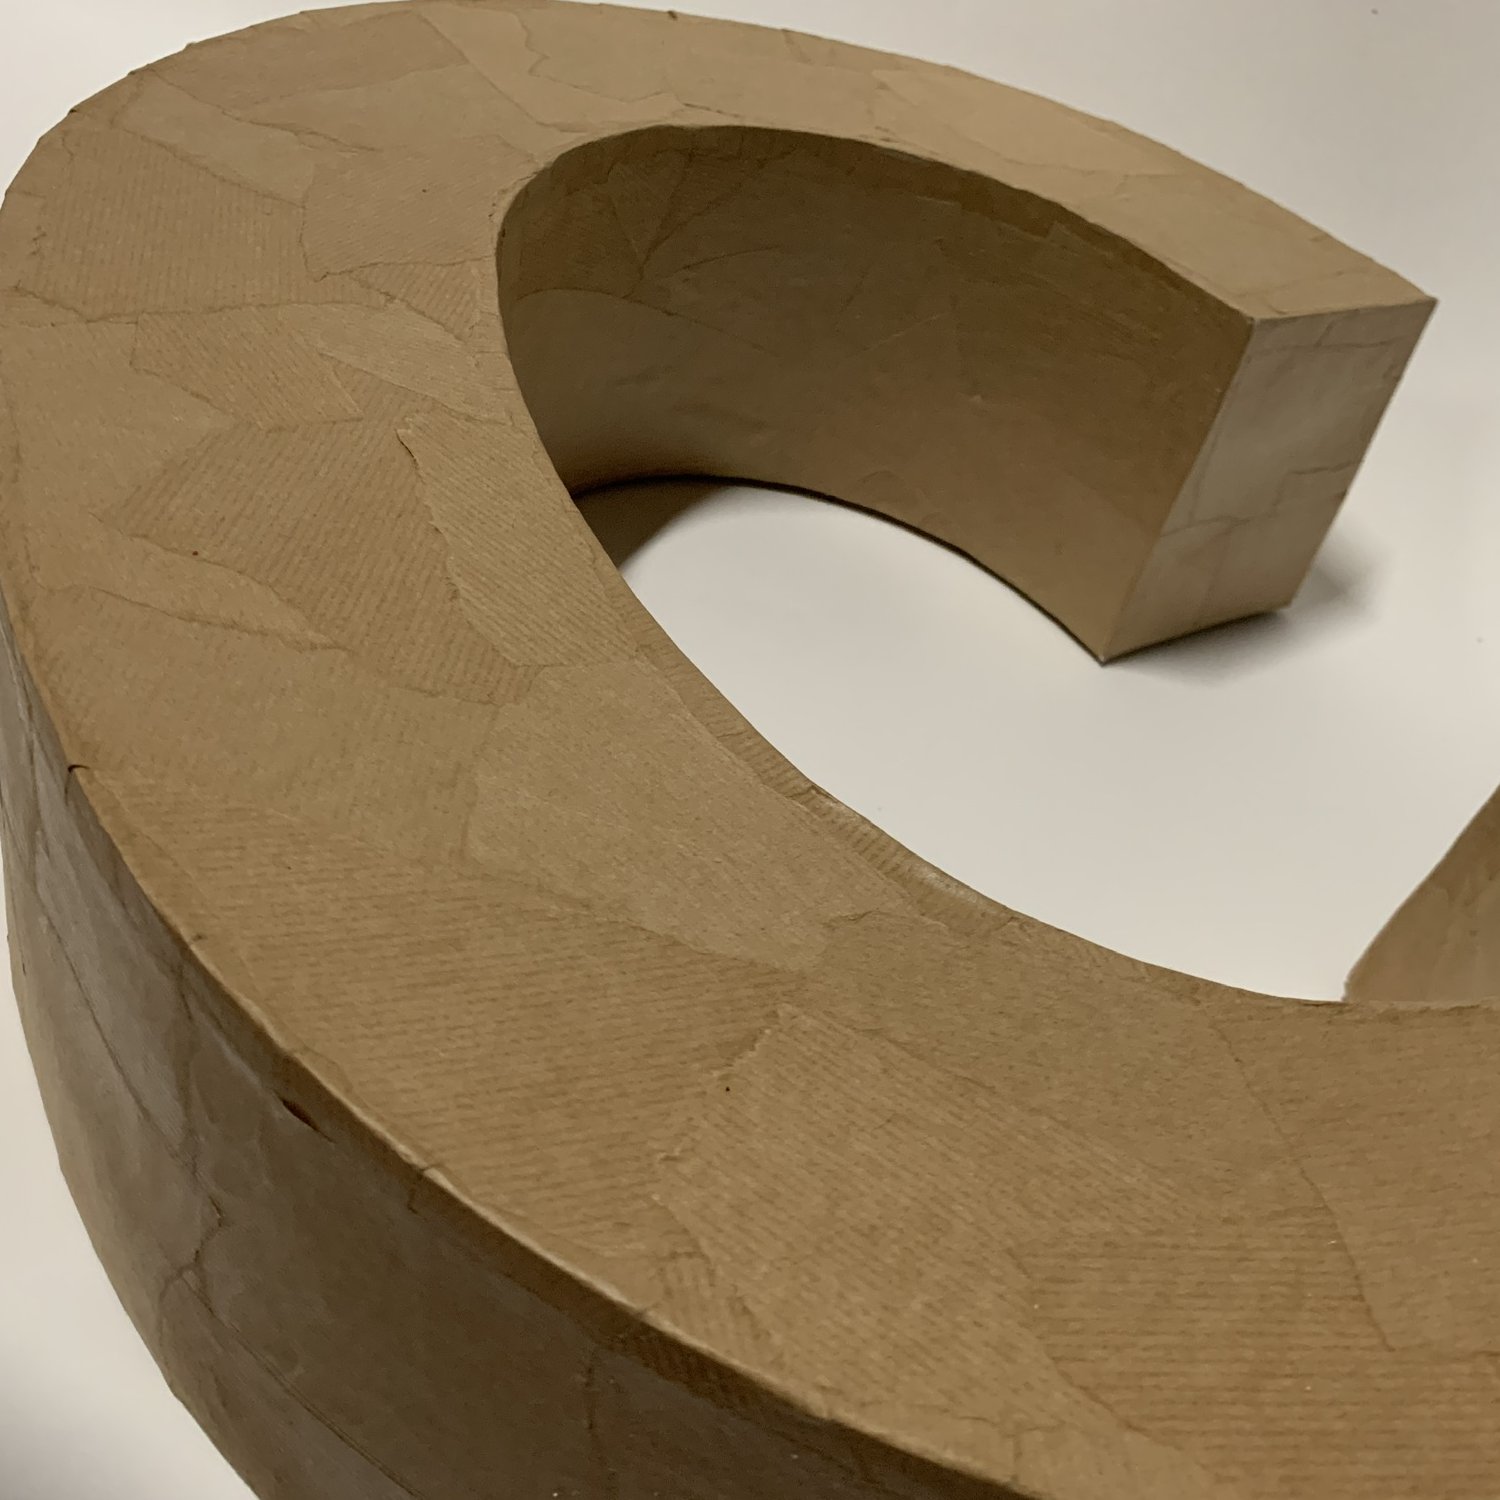 5cm Paper Mache Large Cardboard Letters Shapes & Signs 3D Craft Choose  Letter